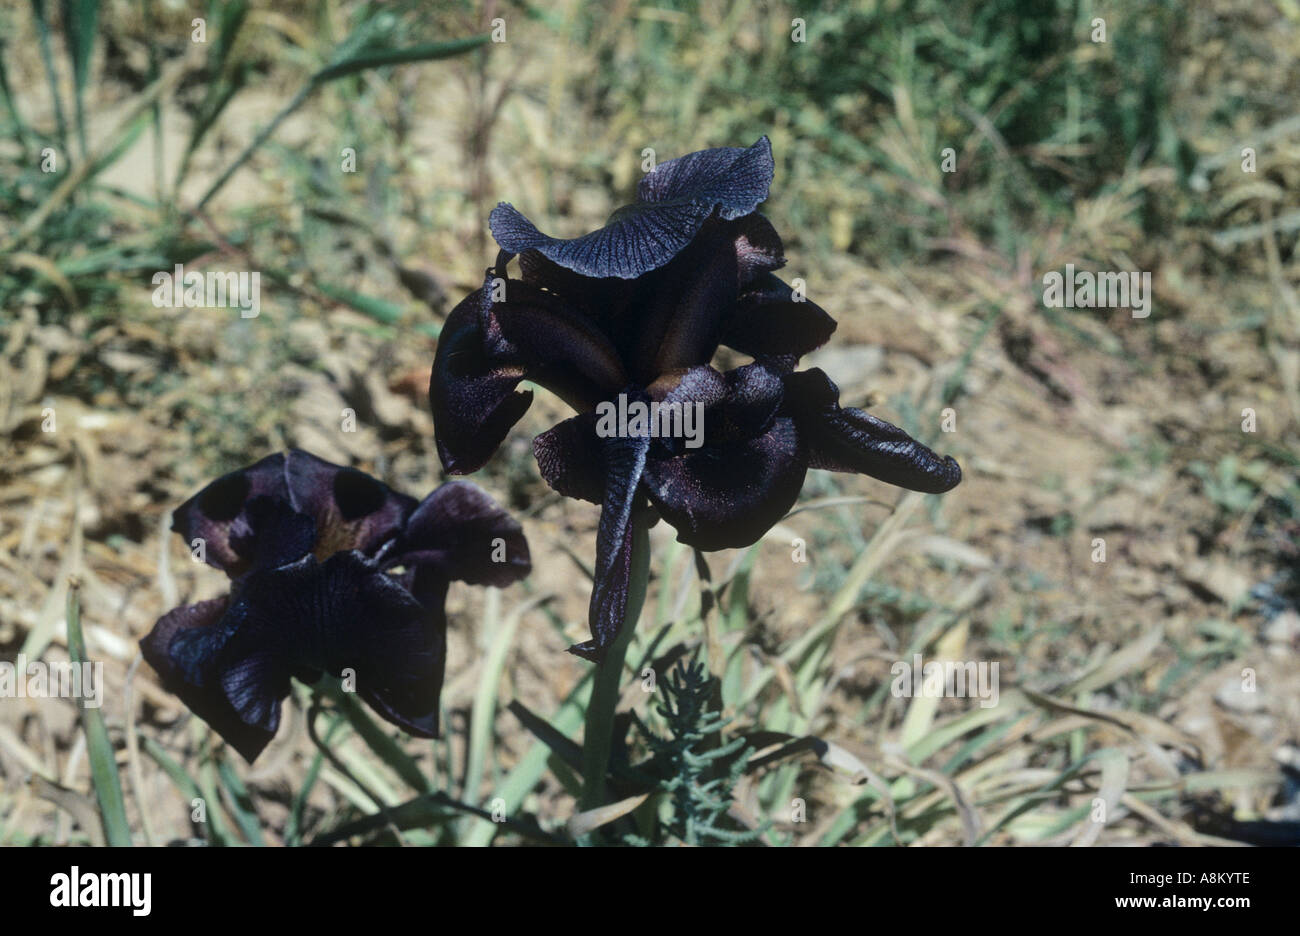 The Black Iris the national flower of Jordan Stock Photo - Alamy